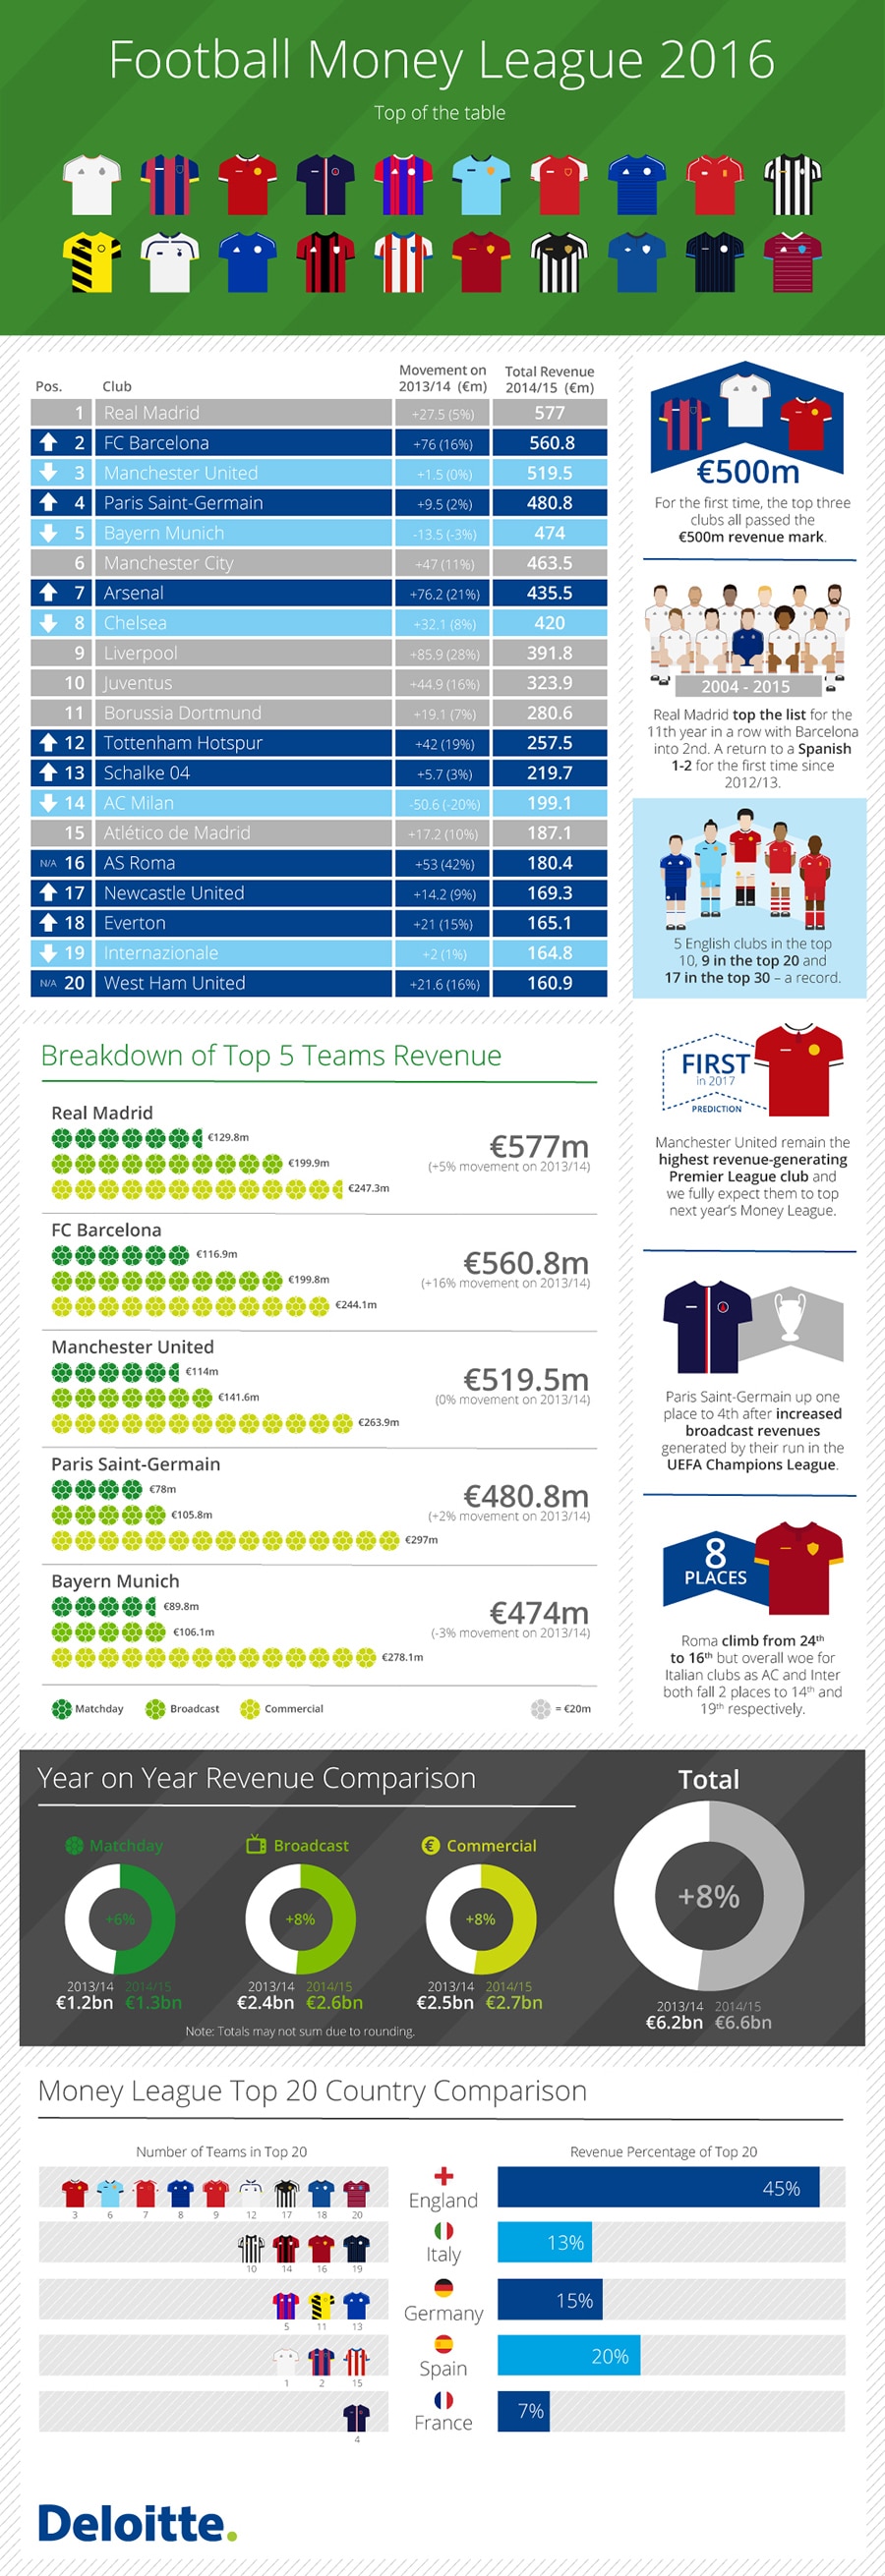 uk-deloitte-sports-football-money-league-2016-infographic.jpg